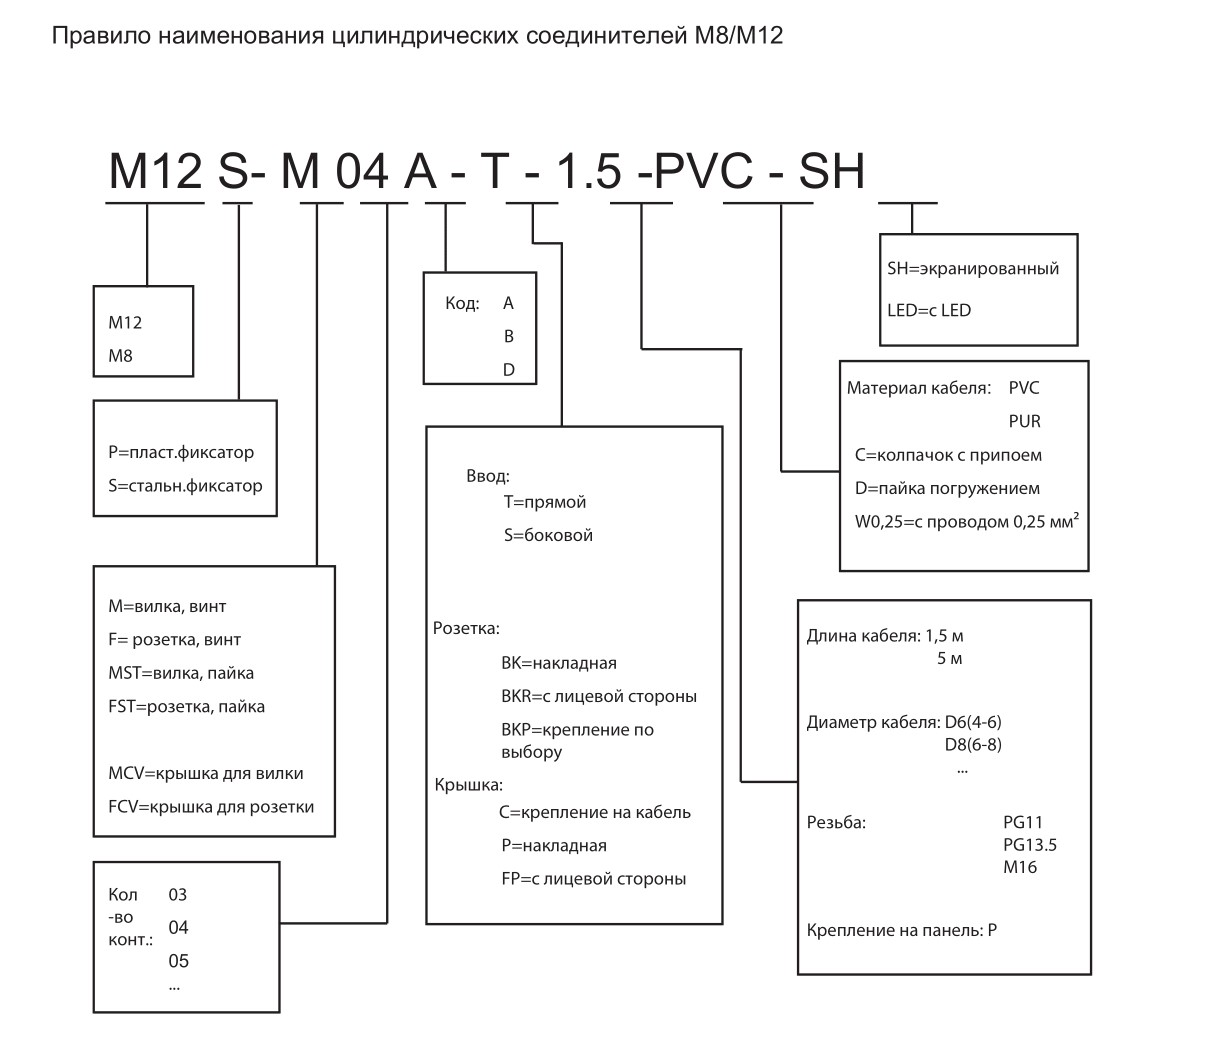 Цилиндрический соединитель-вилка с кабелем M12-M04D-BKR-PG9-PFN-1.0 1632043014013: Структура обозначения